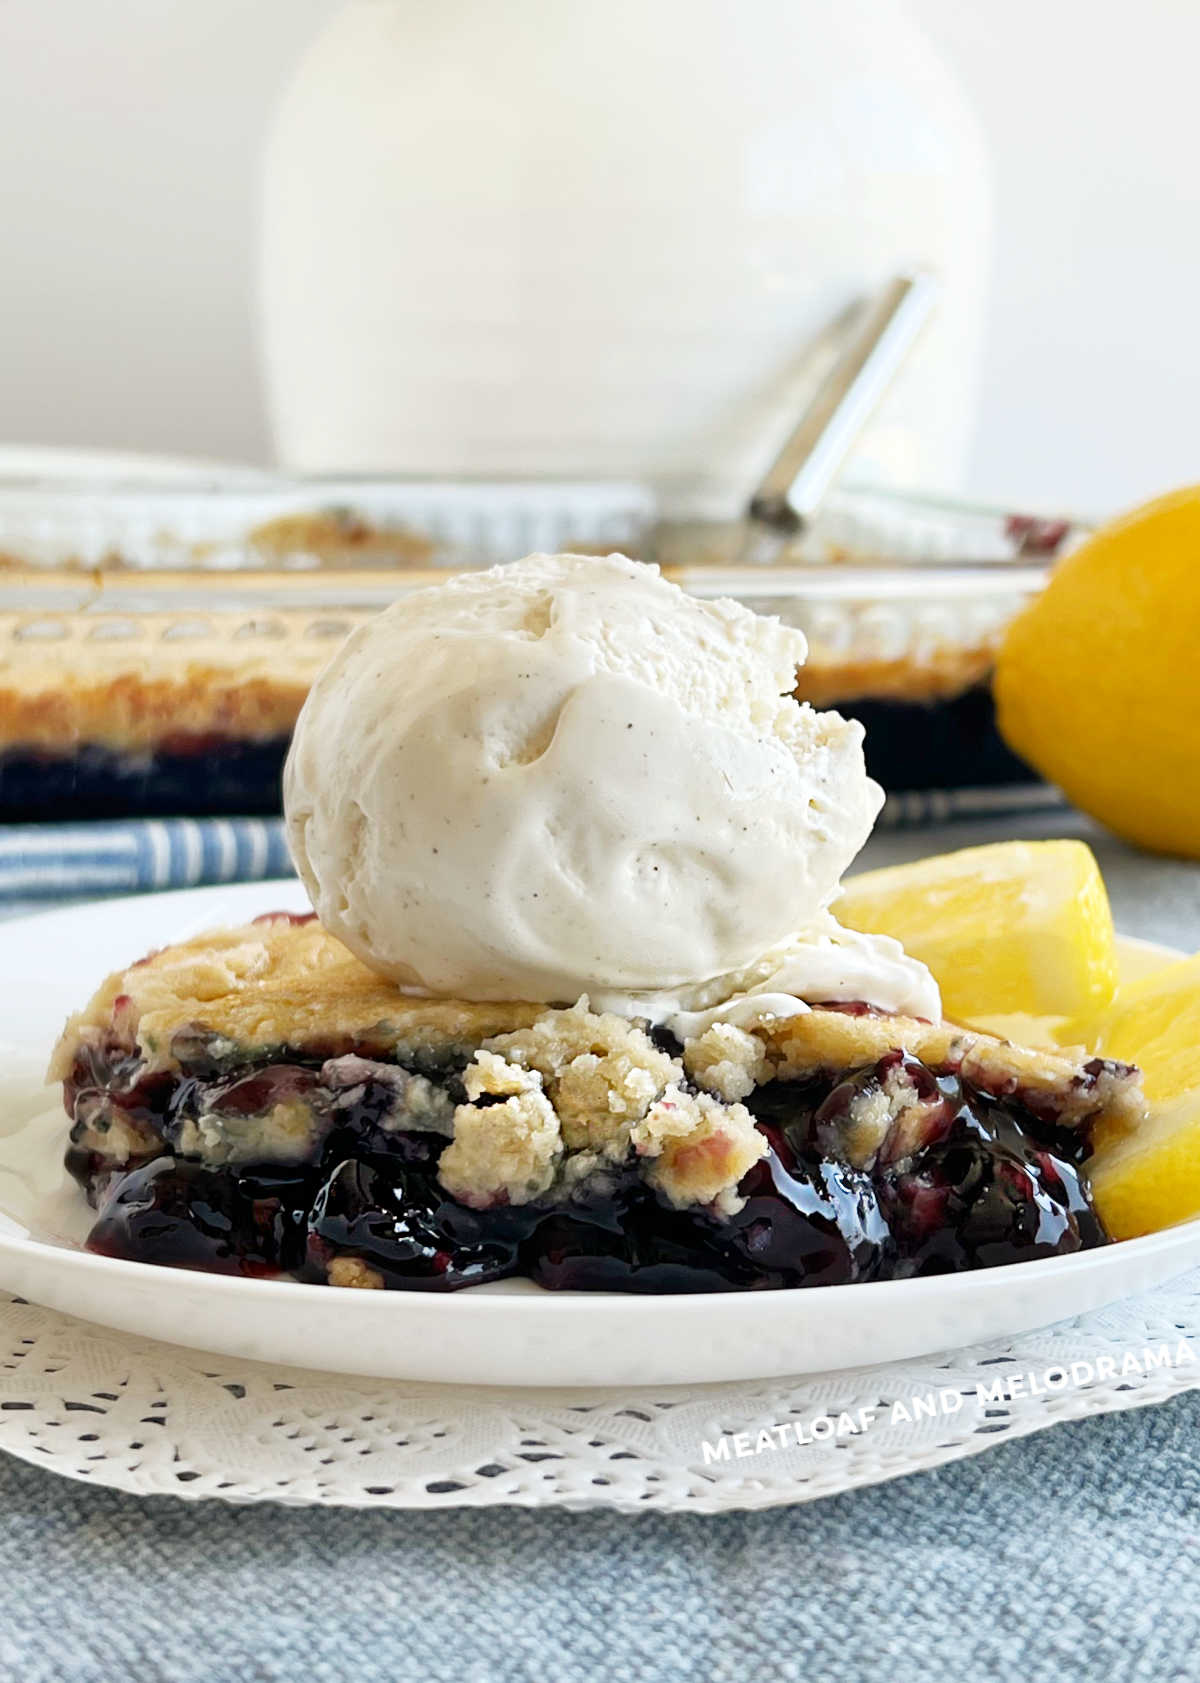 blueberry dump cake dessert on plate with vanilla ice cream and lemon slices